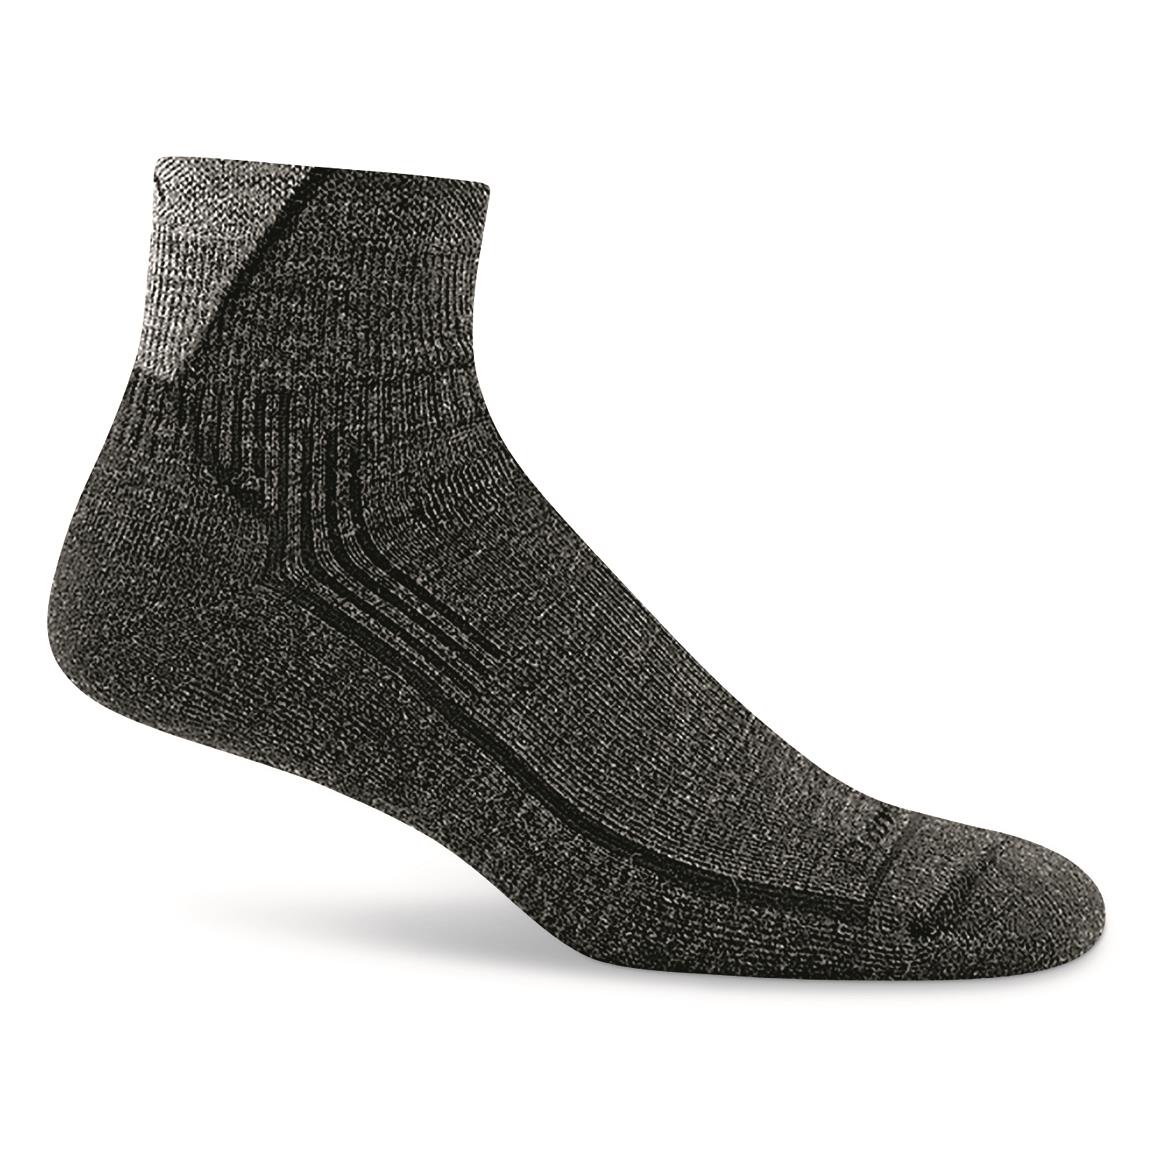 Darn Tough Men's Hiker Quarter Cushion Socks, Hiker Black